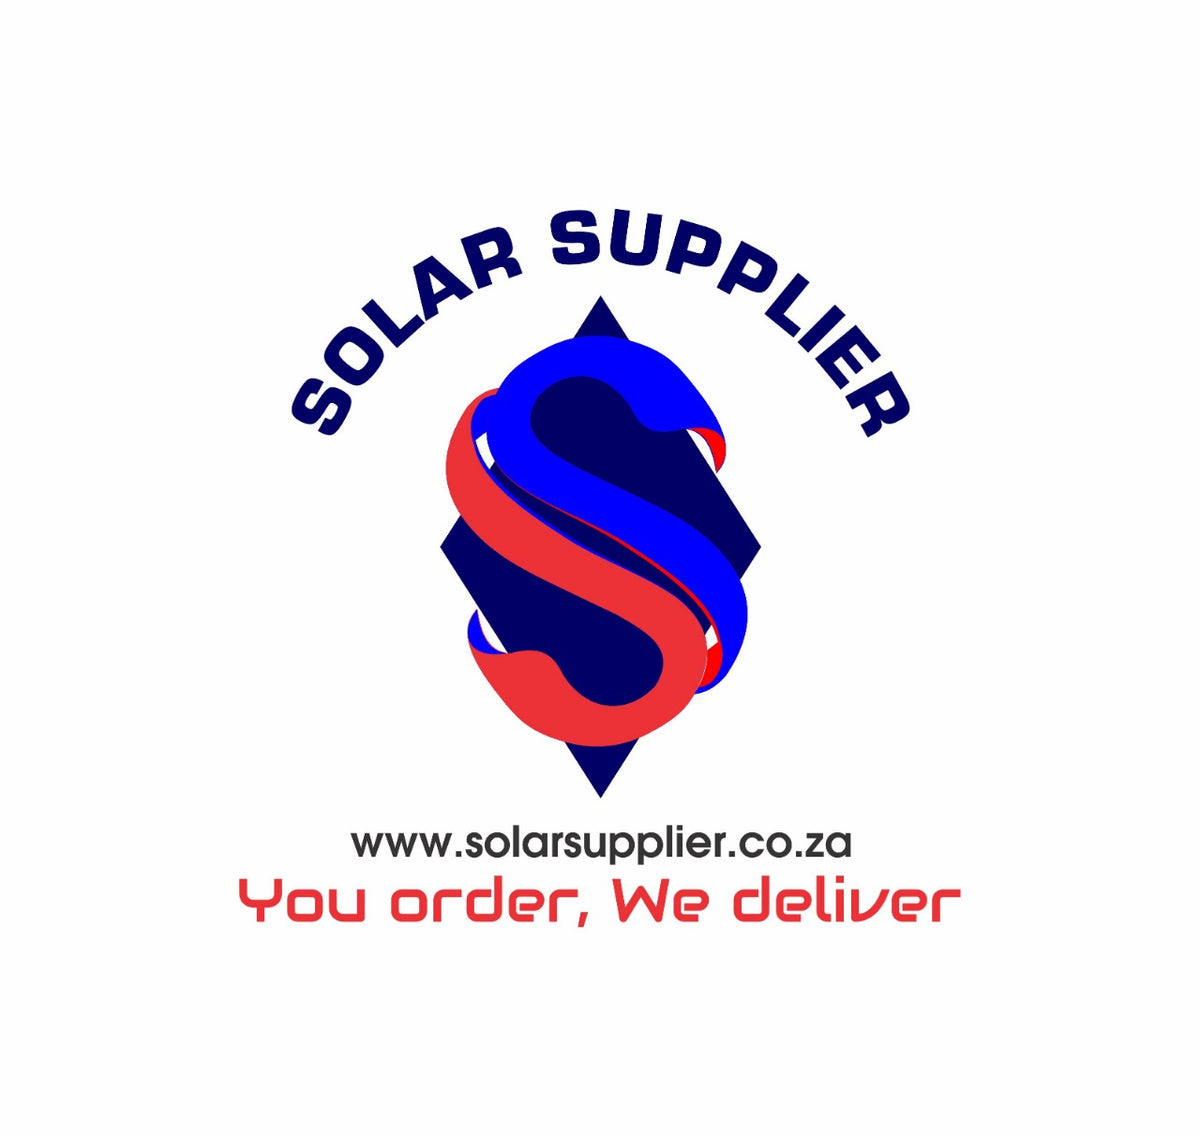 www.solarsupplier.co.za – Solar Supplier